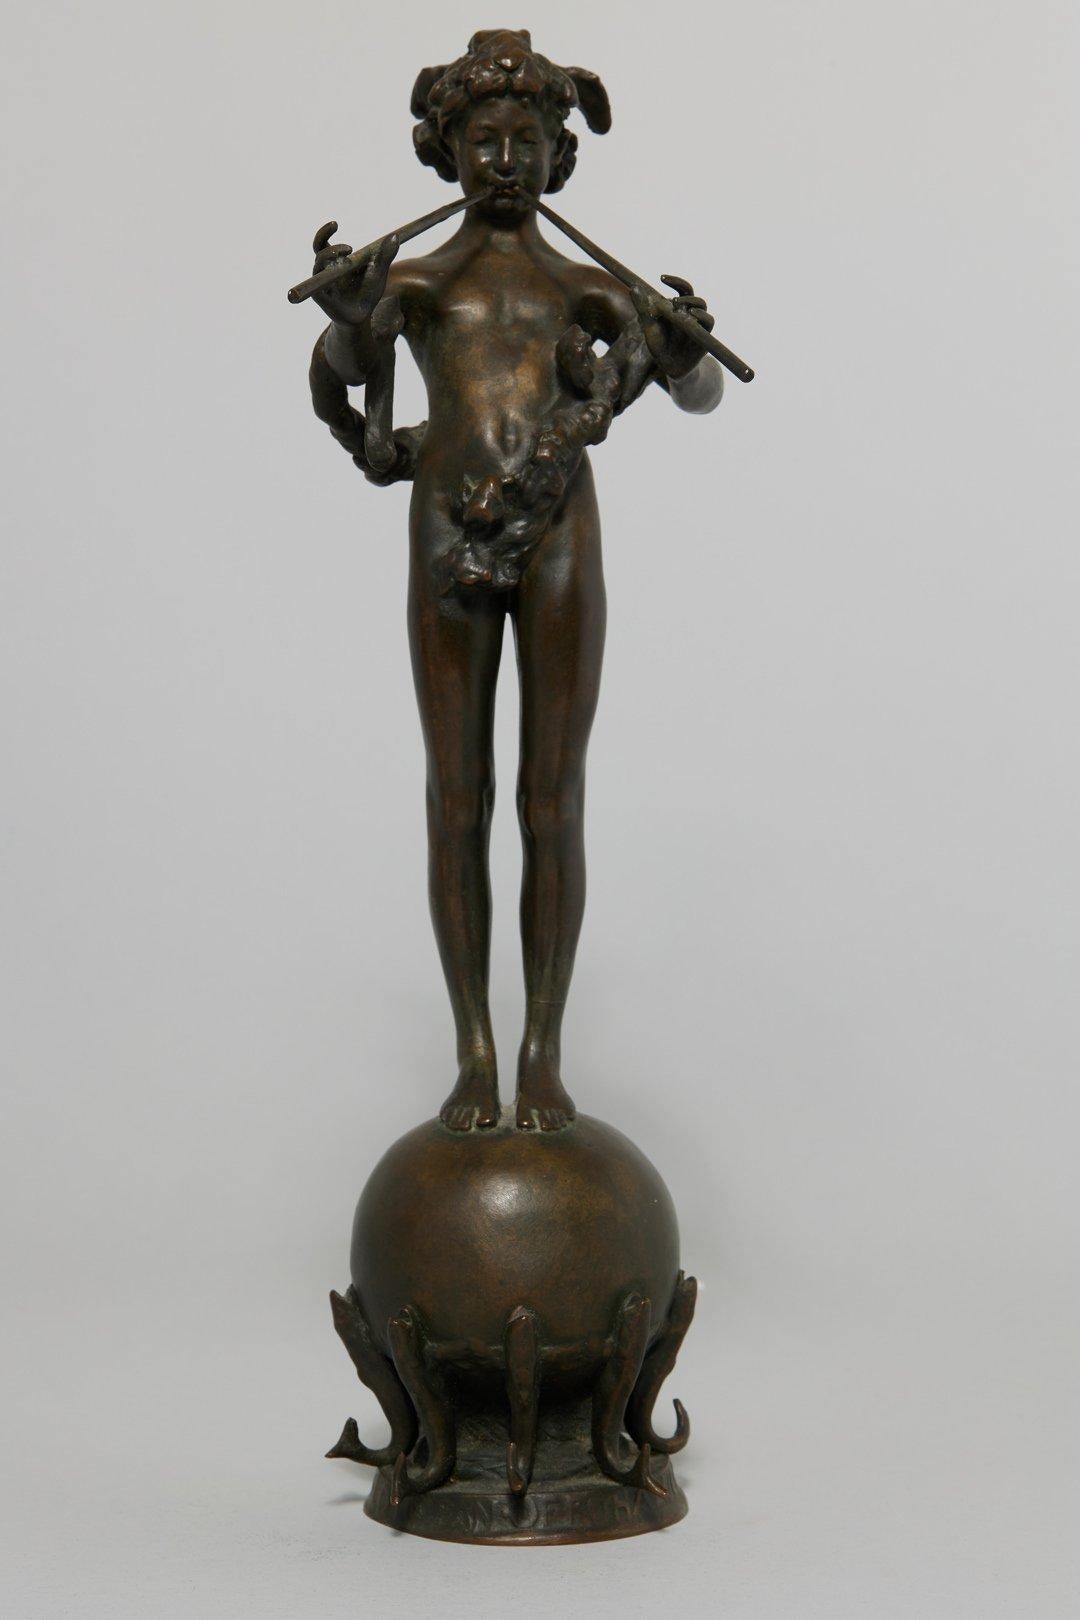 Nude Sculpture Frederick William MacMonnies - Pan de Rohallion, 1889-90 sculpture classique en bronze